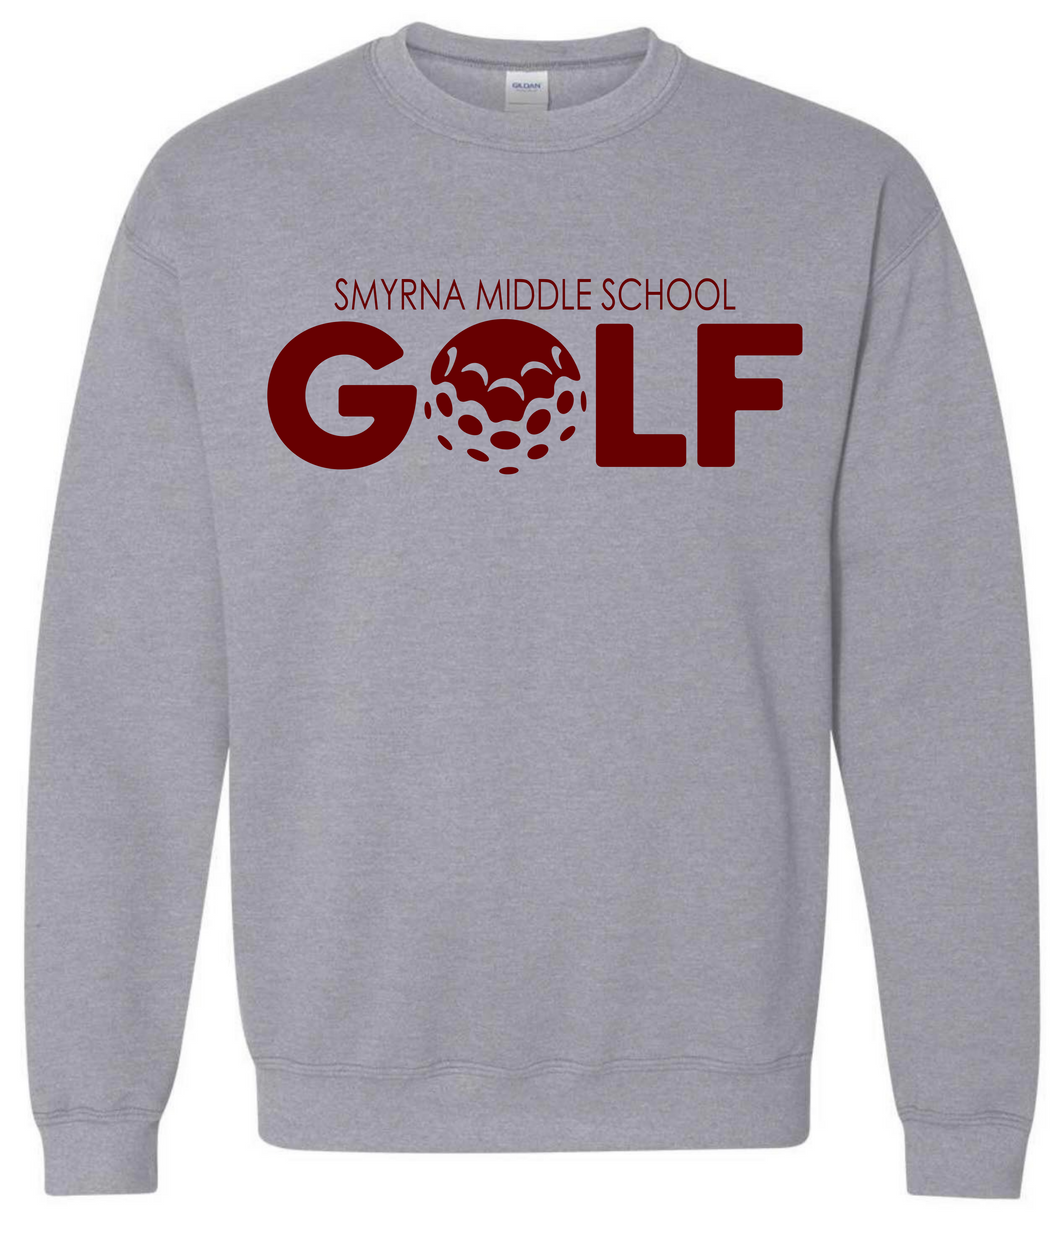 Smyrna Middle School Golf Sweatshirt